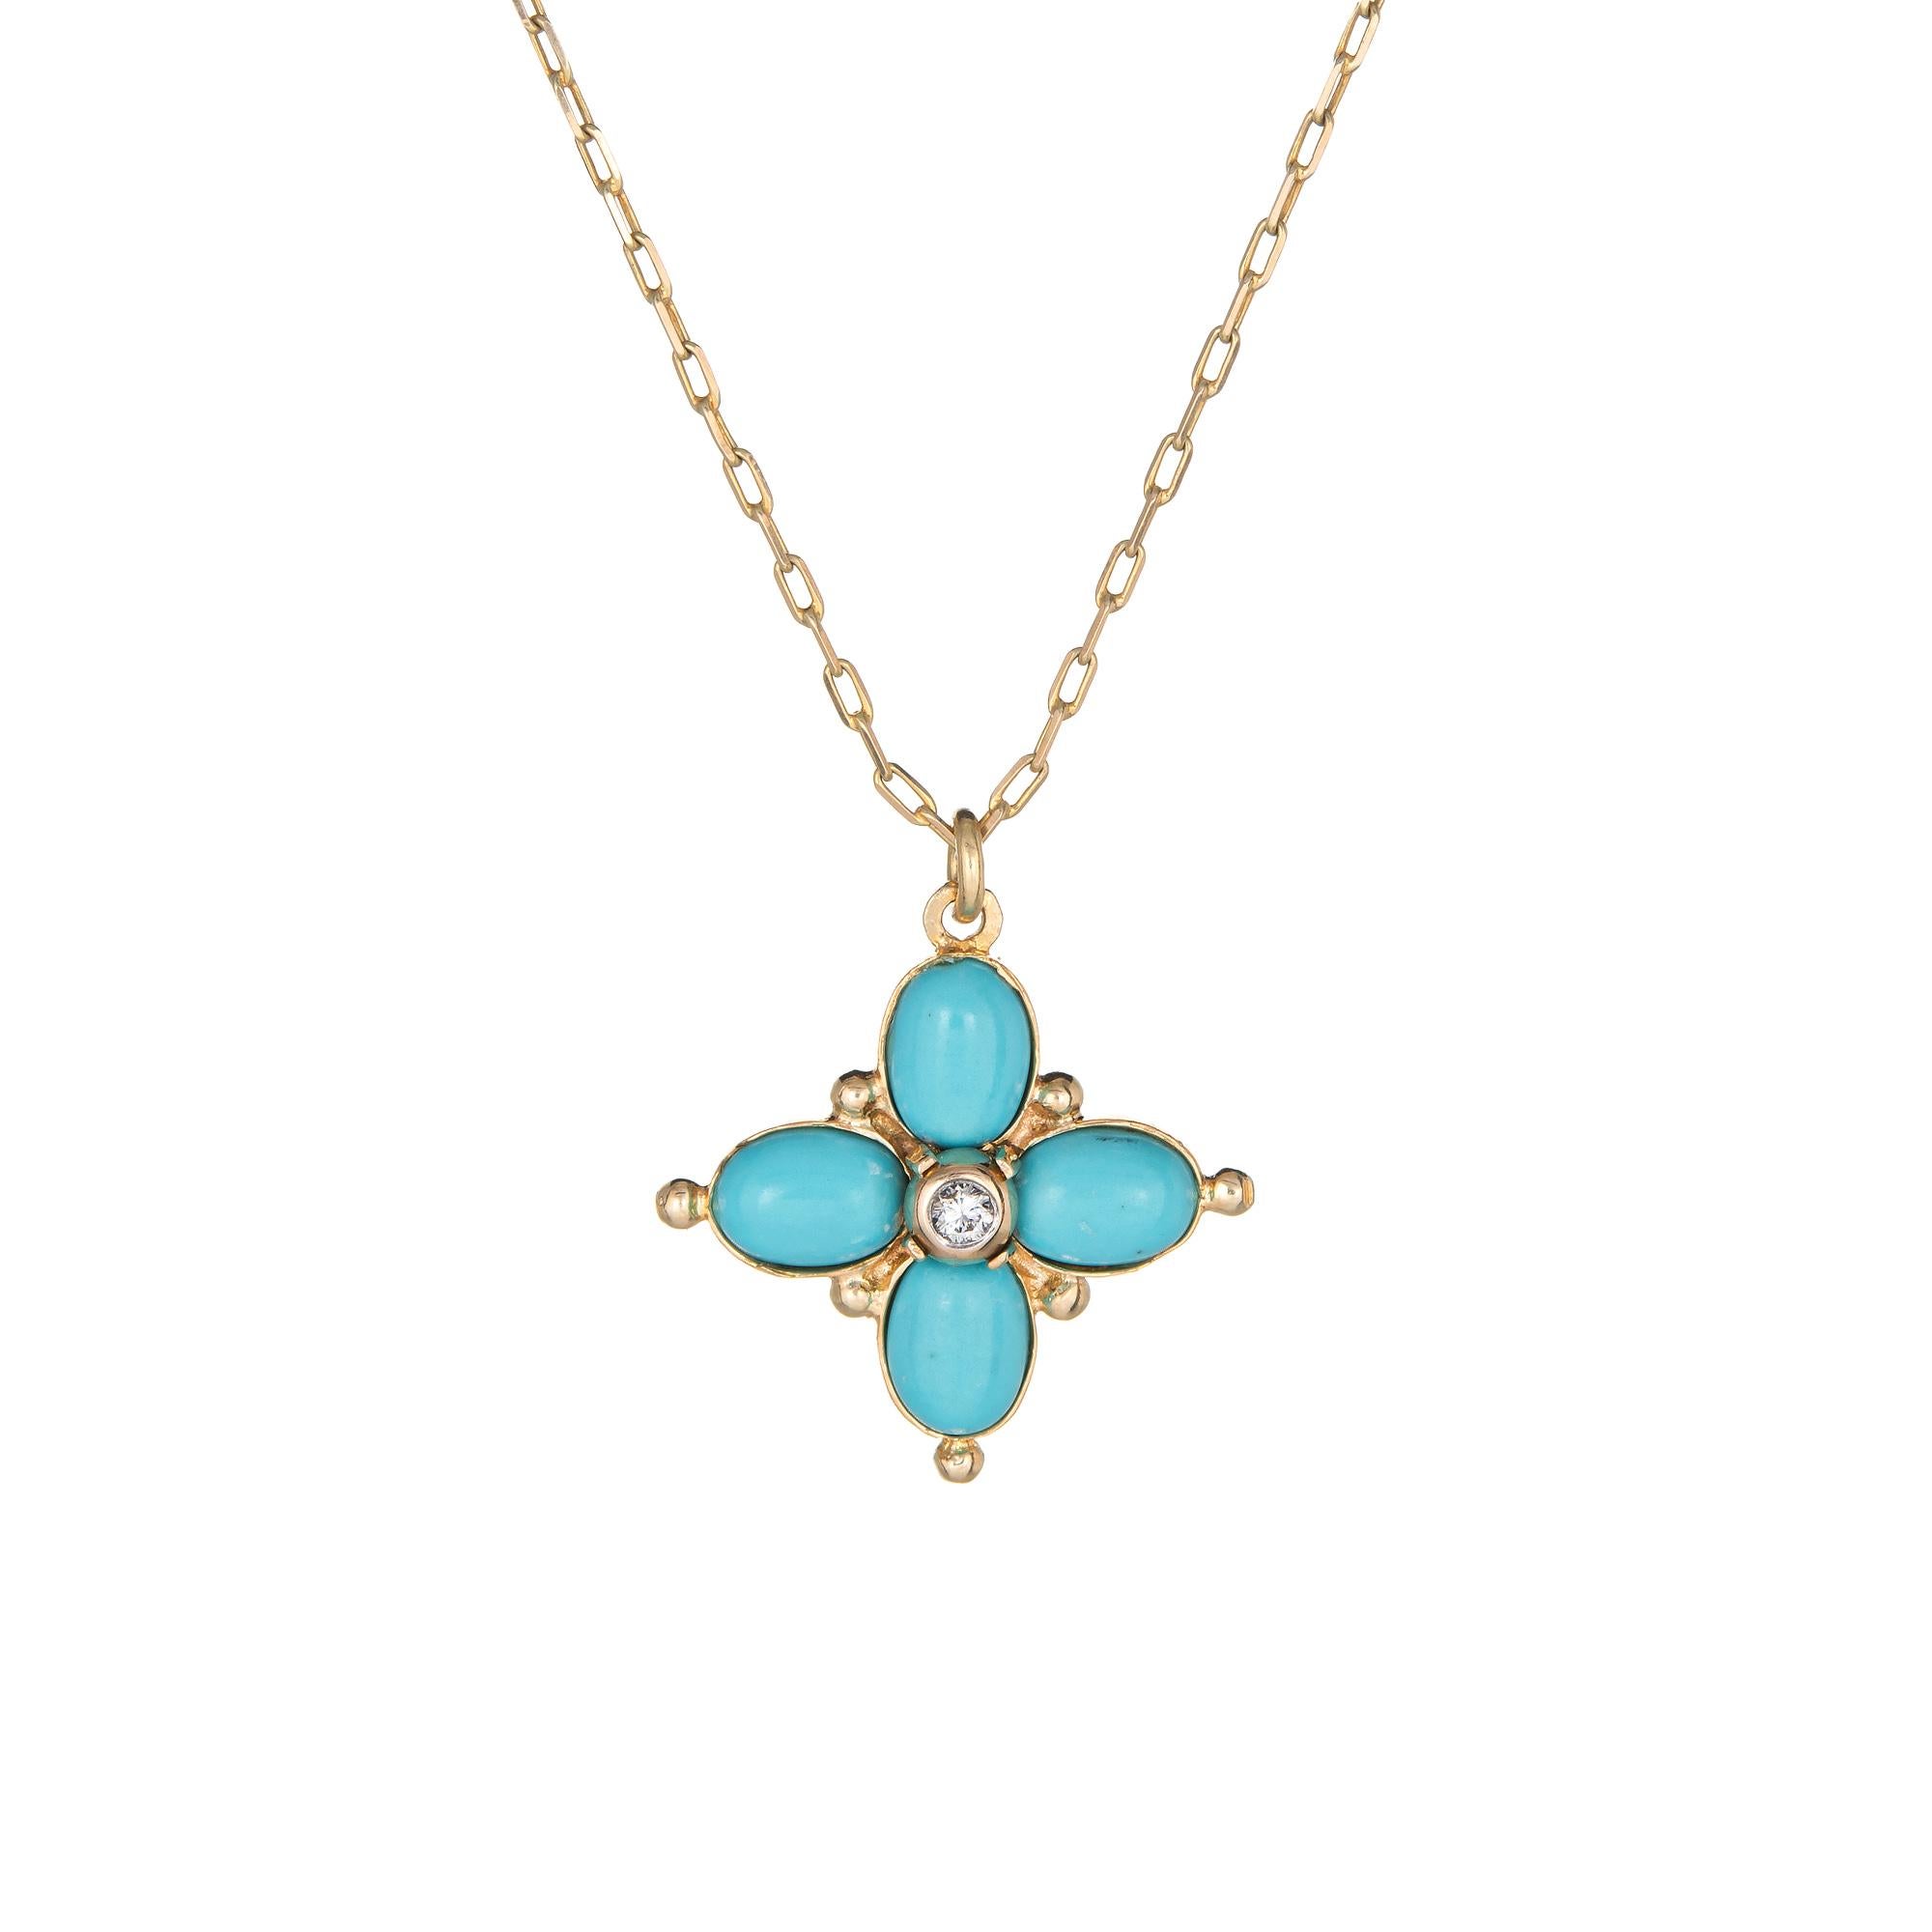 Oval Cut Turquoise Diamond Pendant Necklace Vintage 14 Karat Yellow Gold Chain Jewelry